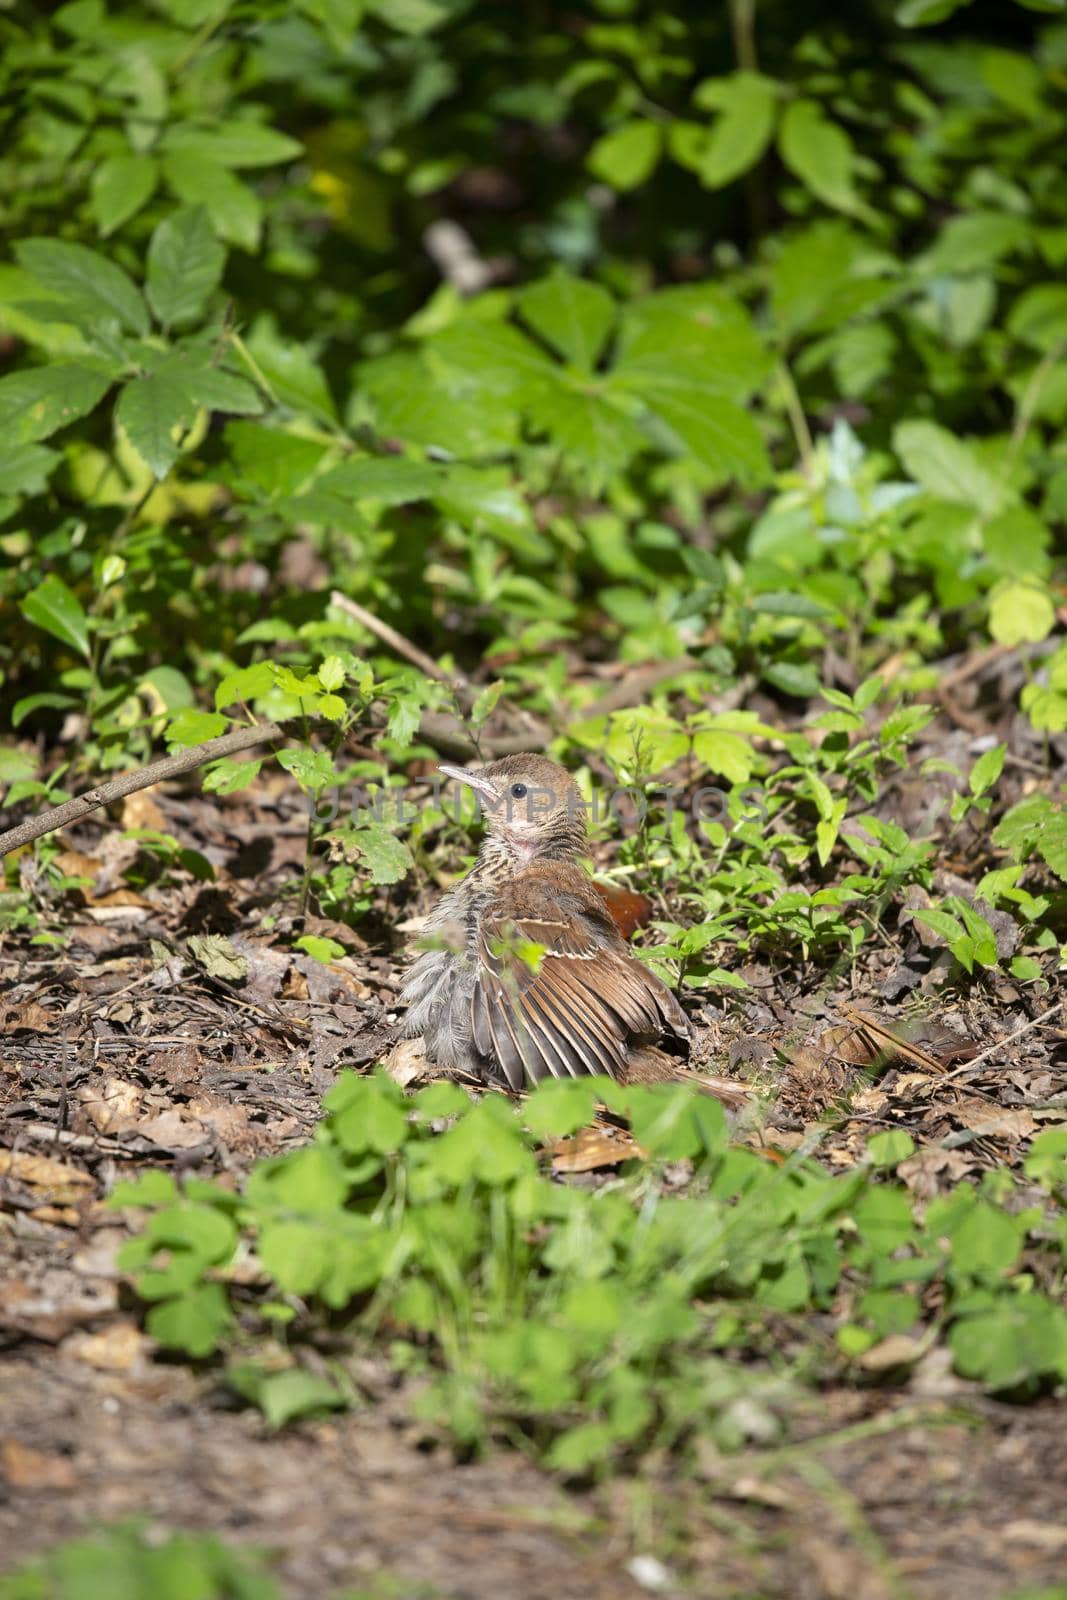 Juvenile brown thrasher bird (Toxostoma rufum) facing the left